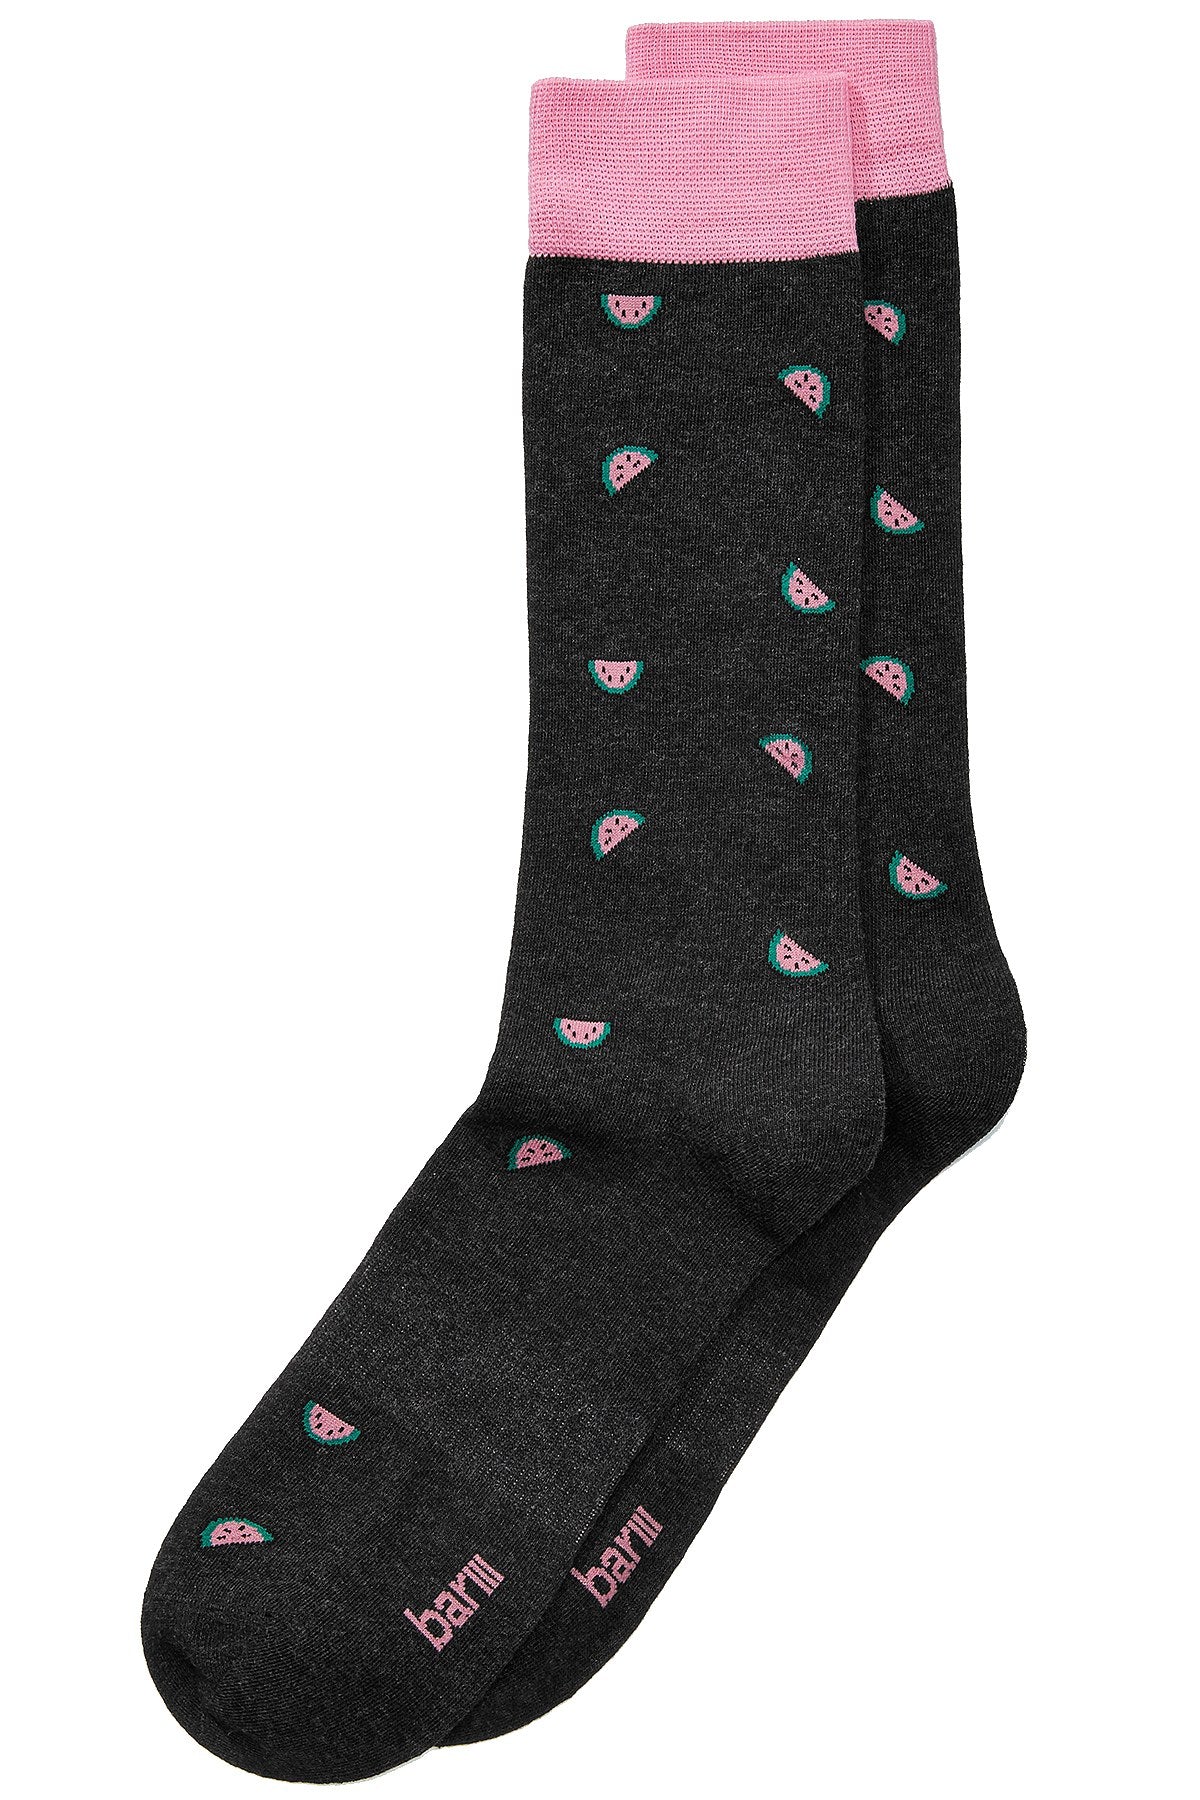 BAR III Charcoal/Pink Watermelon Dress Socks